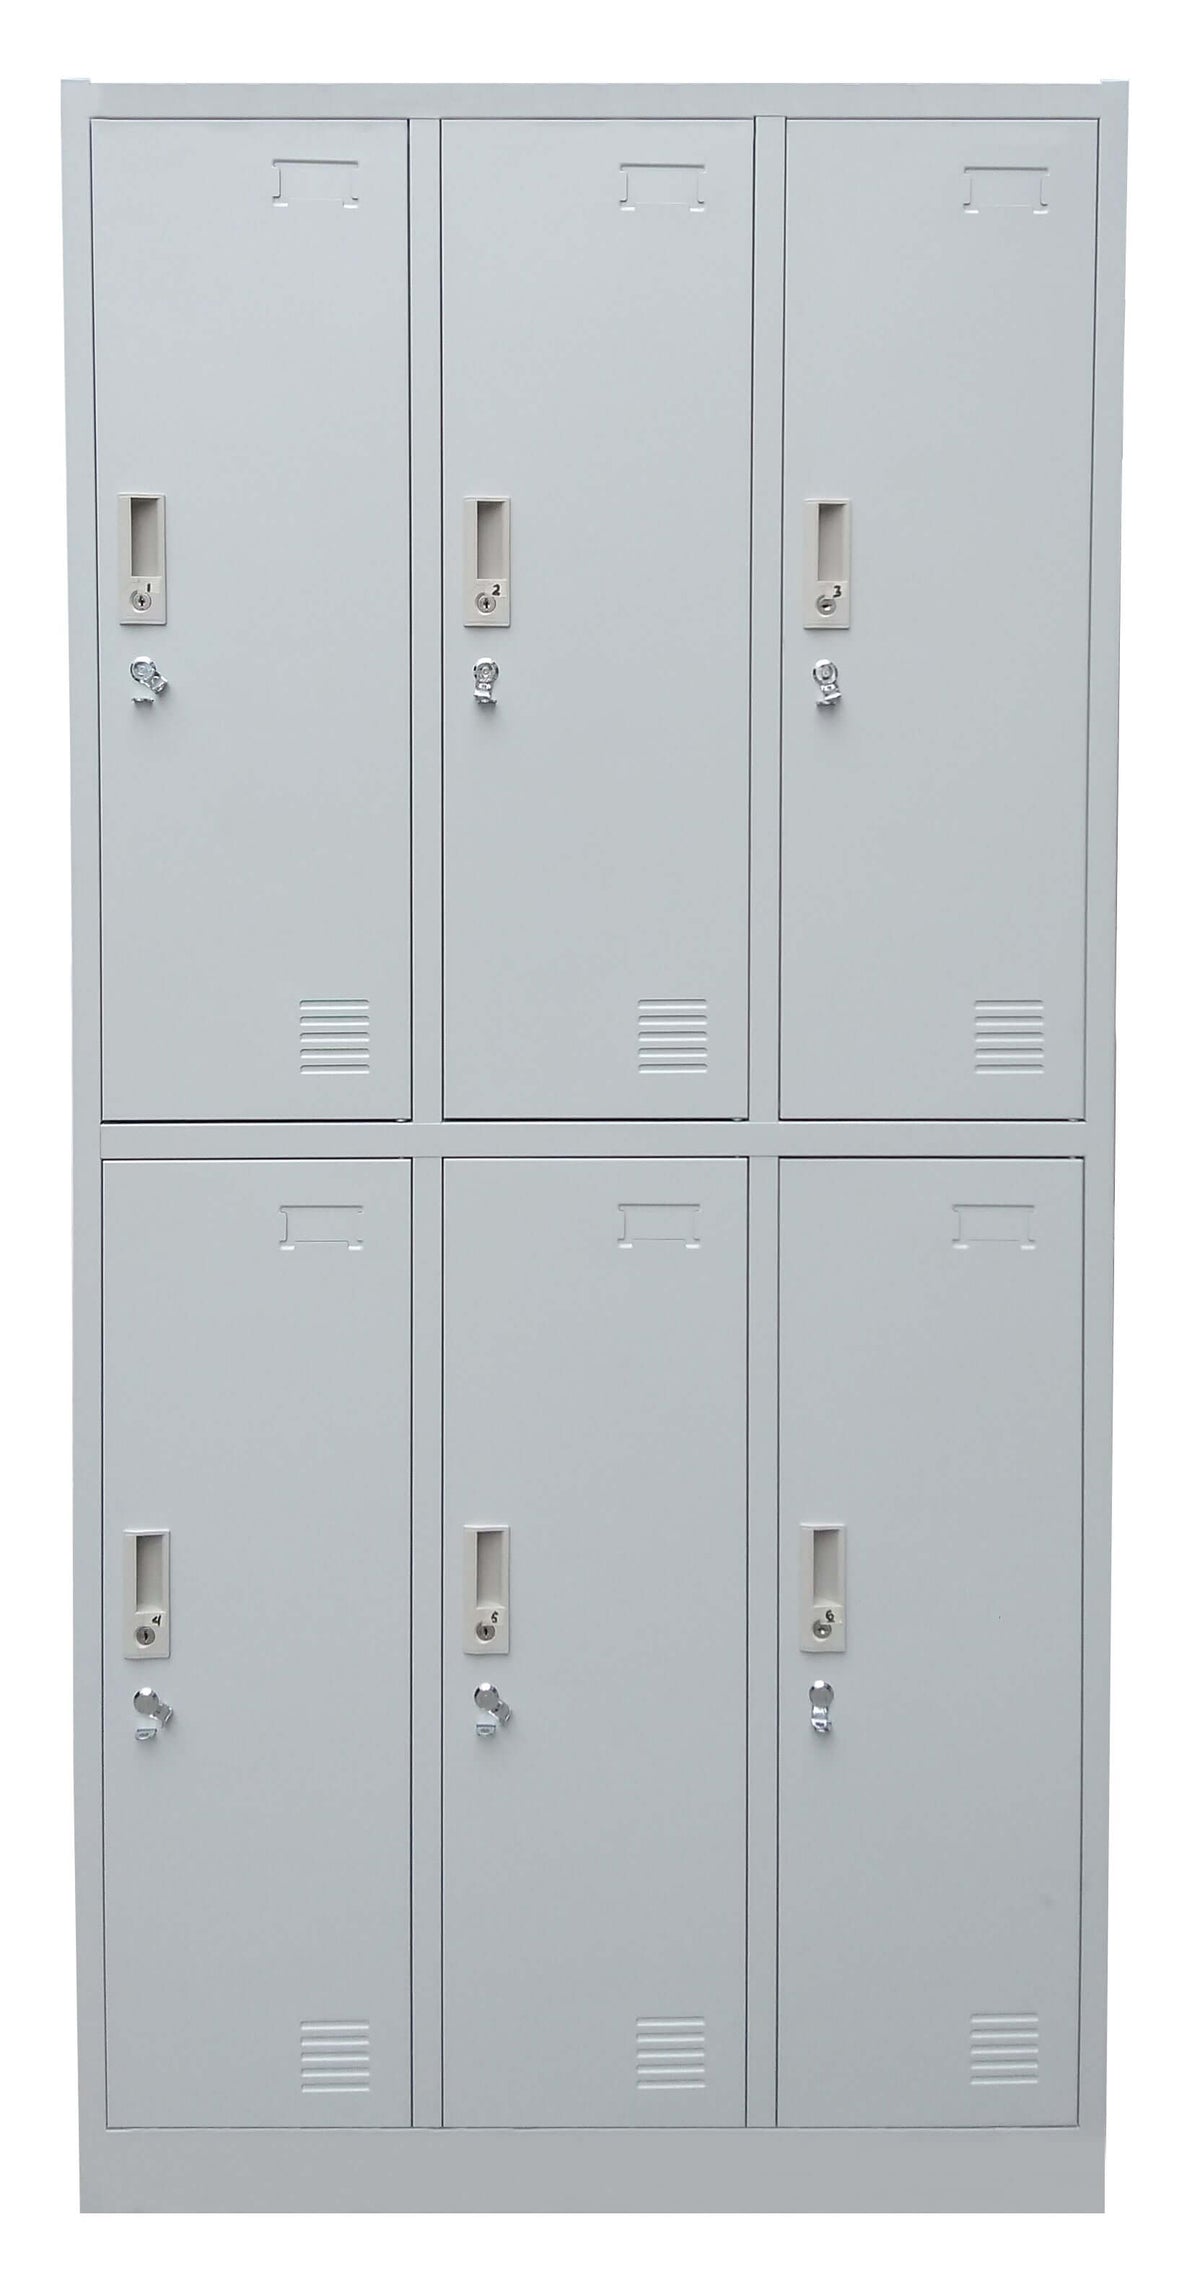 6 Door Steel Locker Cabinet Padlock Hasp DL-0645 with and Plate, Name